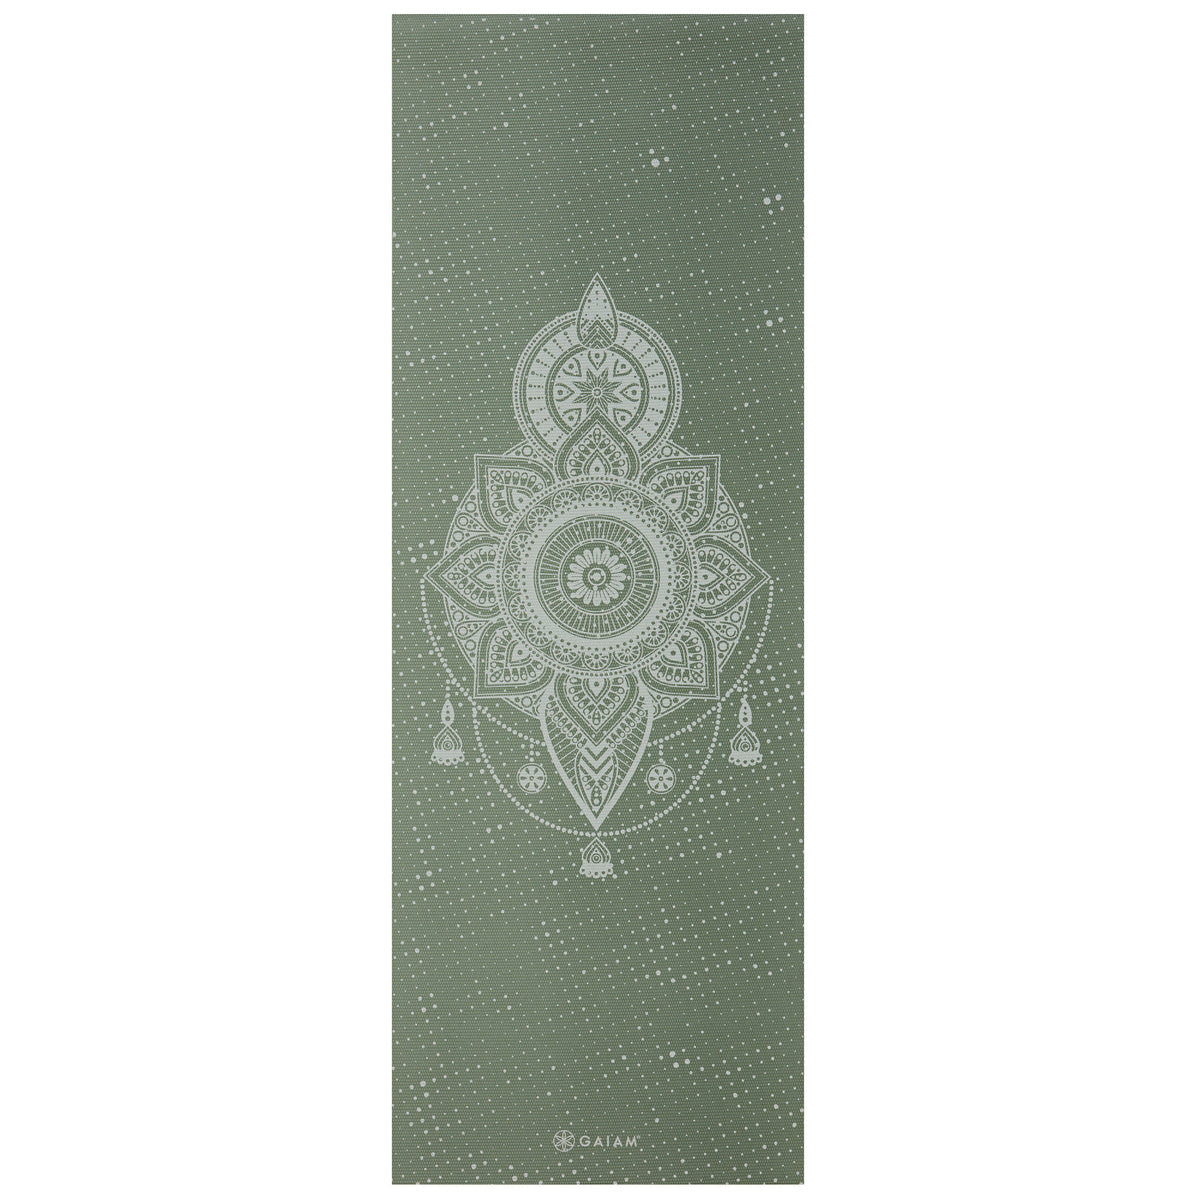 Gaiam Celestial Green Yoga Mat (5mm) flat